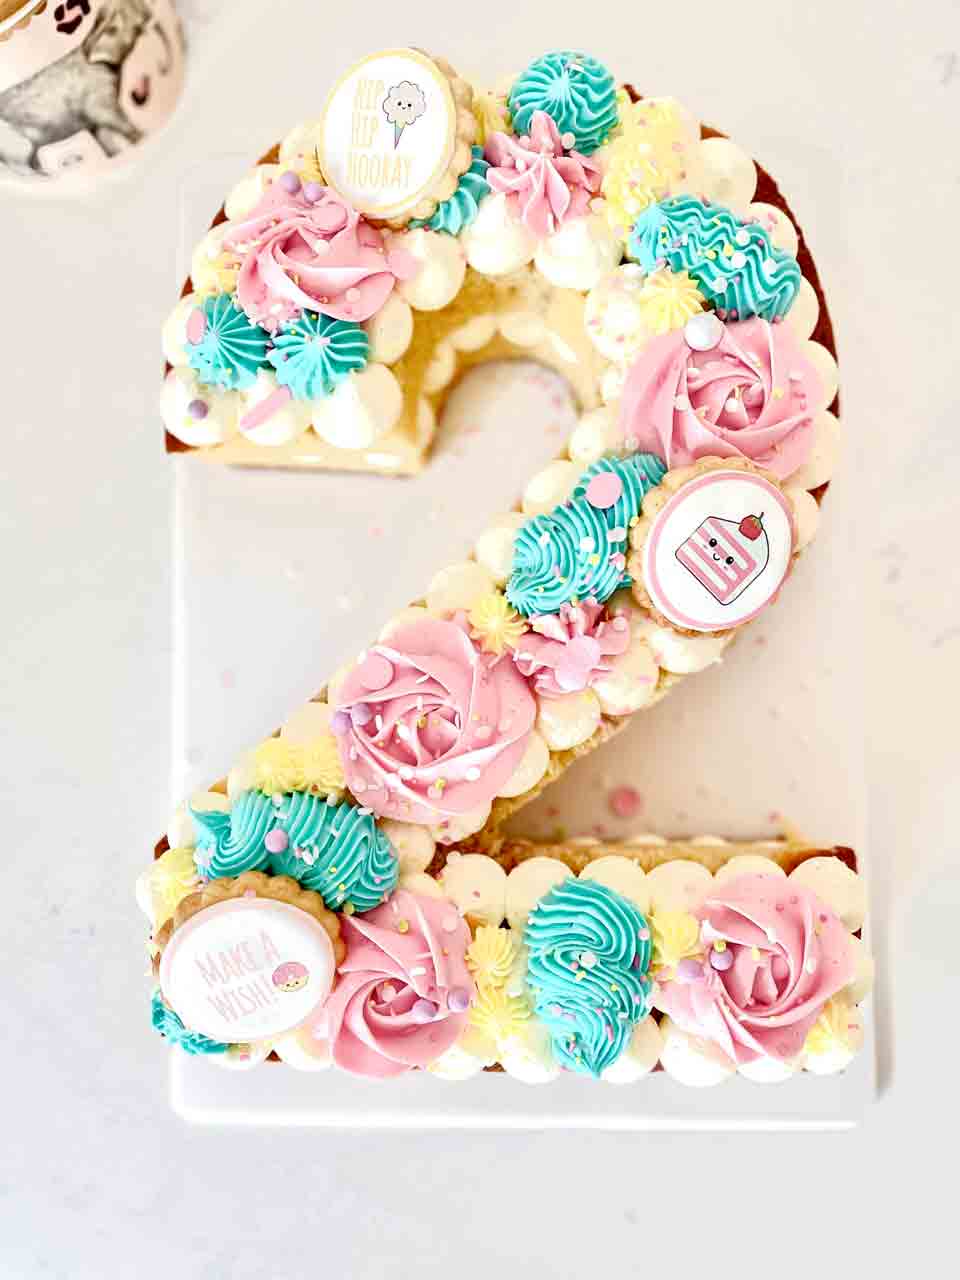 Top 10 birthday cakes for little girls - Goody Jolly Cake